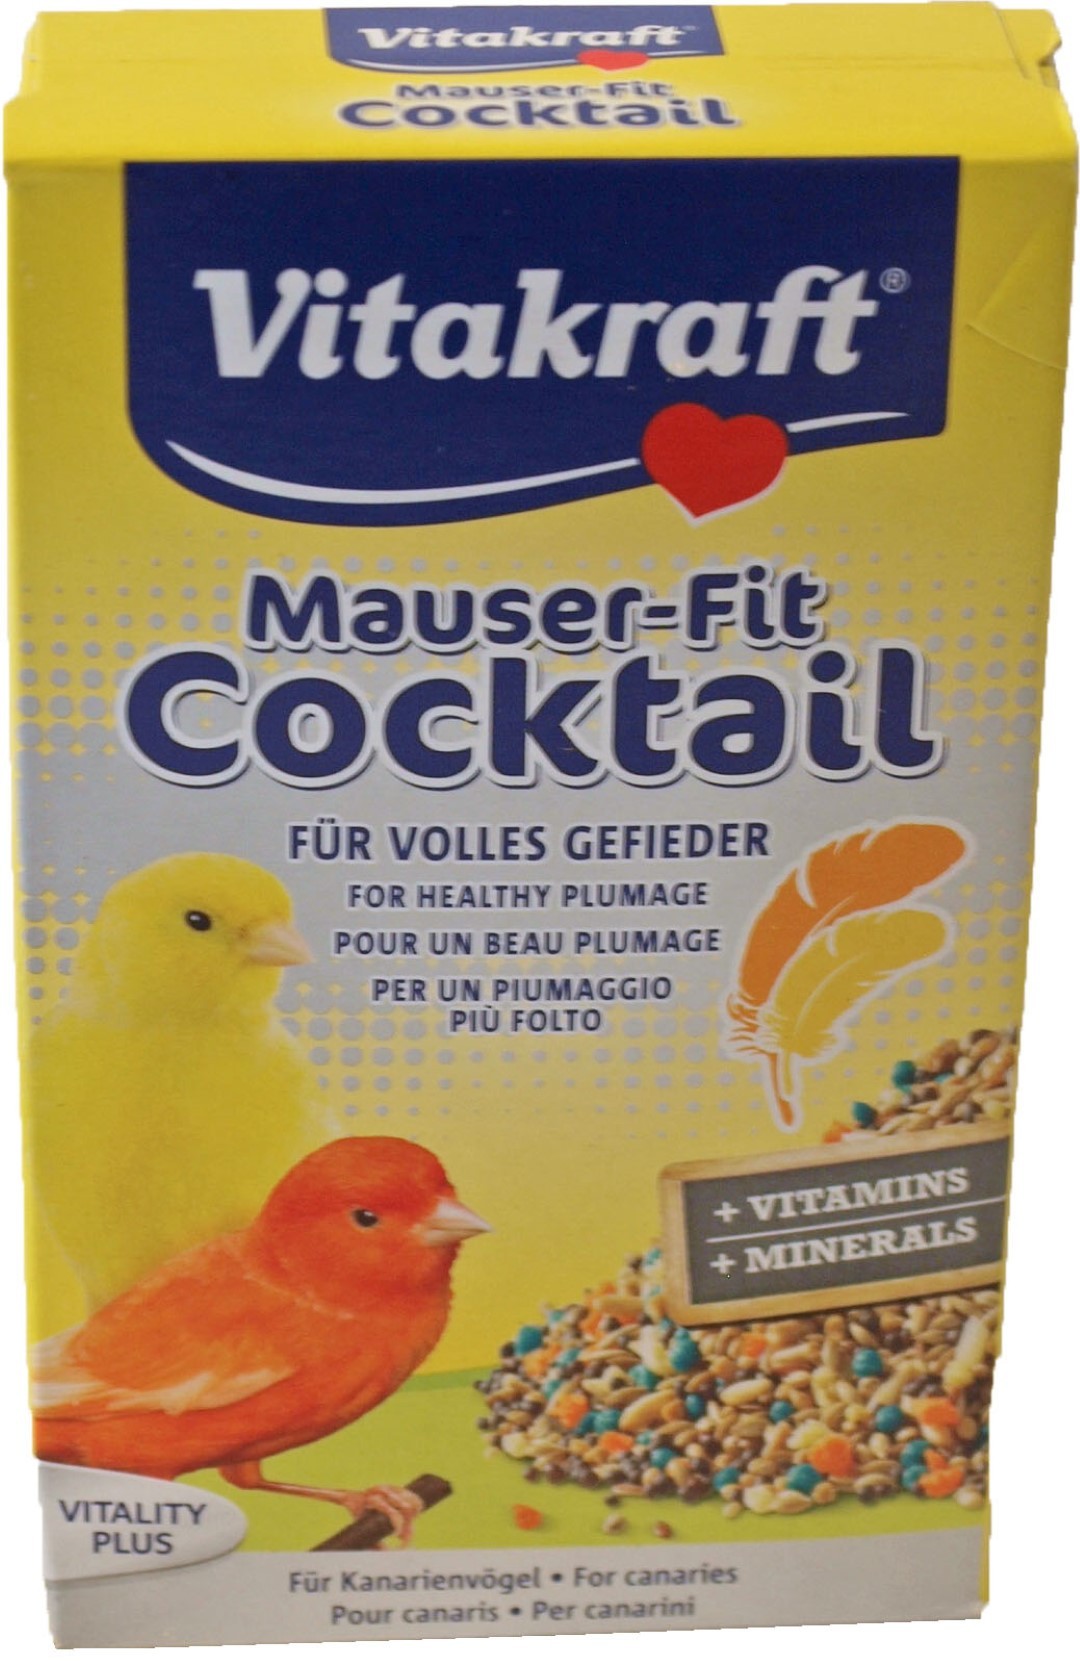 https://www.warentuin.nl/media/catalog/product/1/7/1774008239218803_vitakraft_dierenaccessoires_vitakraft_rui_cocktail_kanarie_200_dee6.jpg